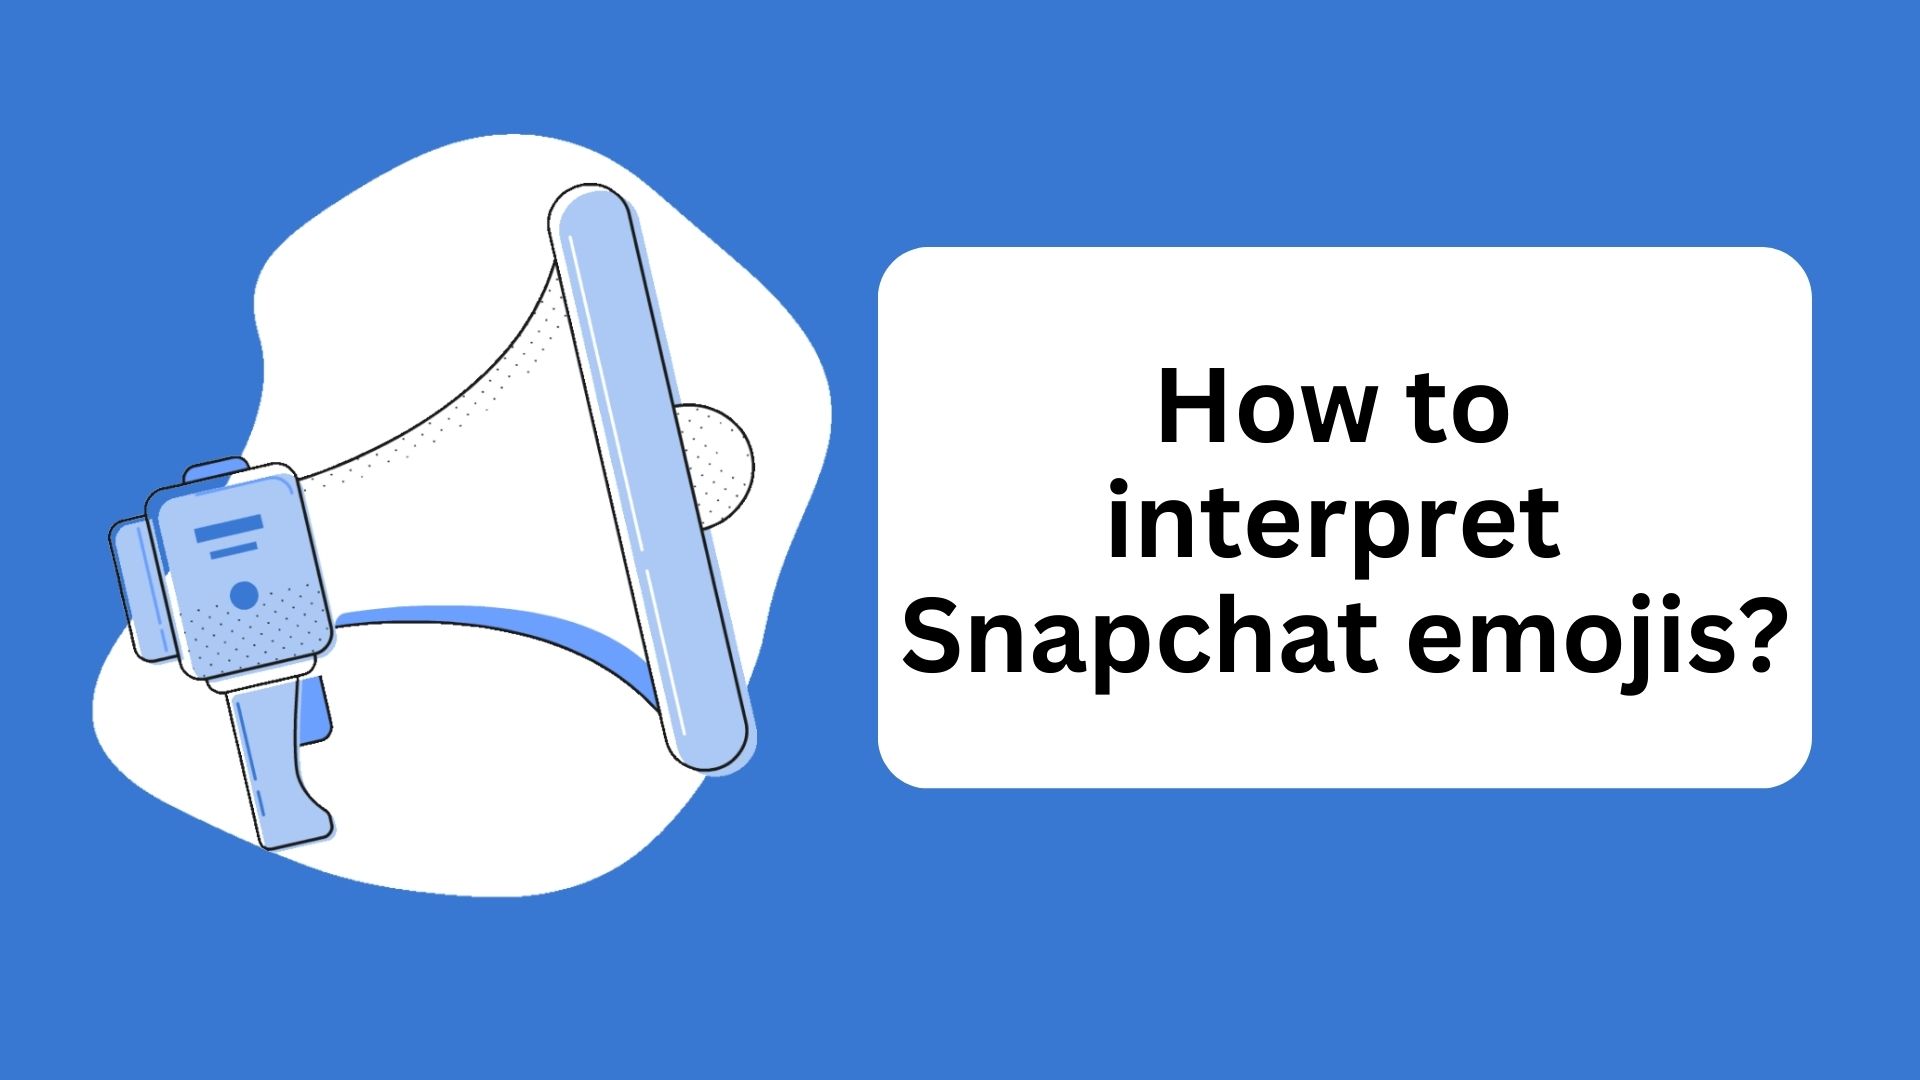 How to interpret Snapchat emojis